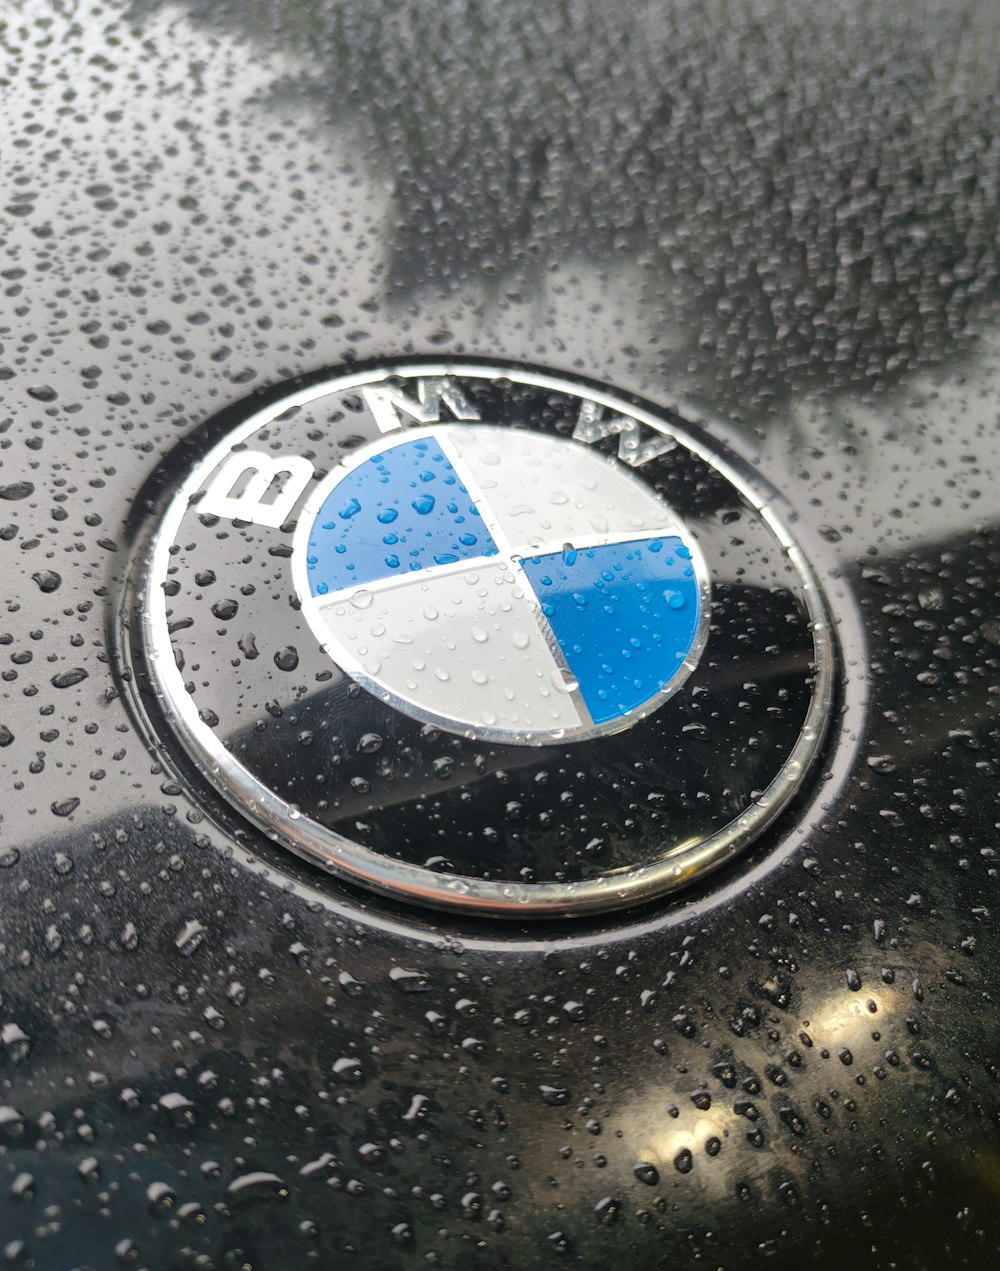 🔥 [96+] BMW Logo Wallpapers